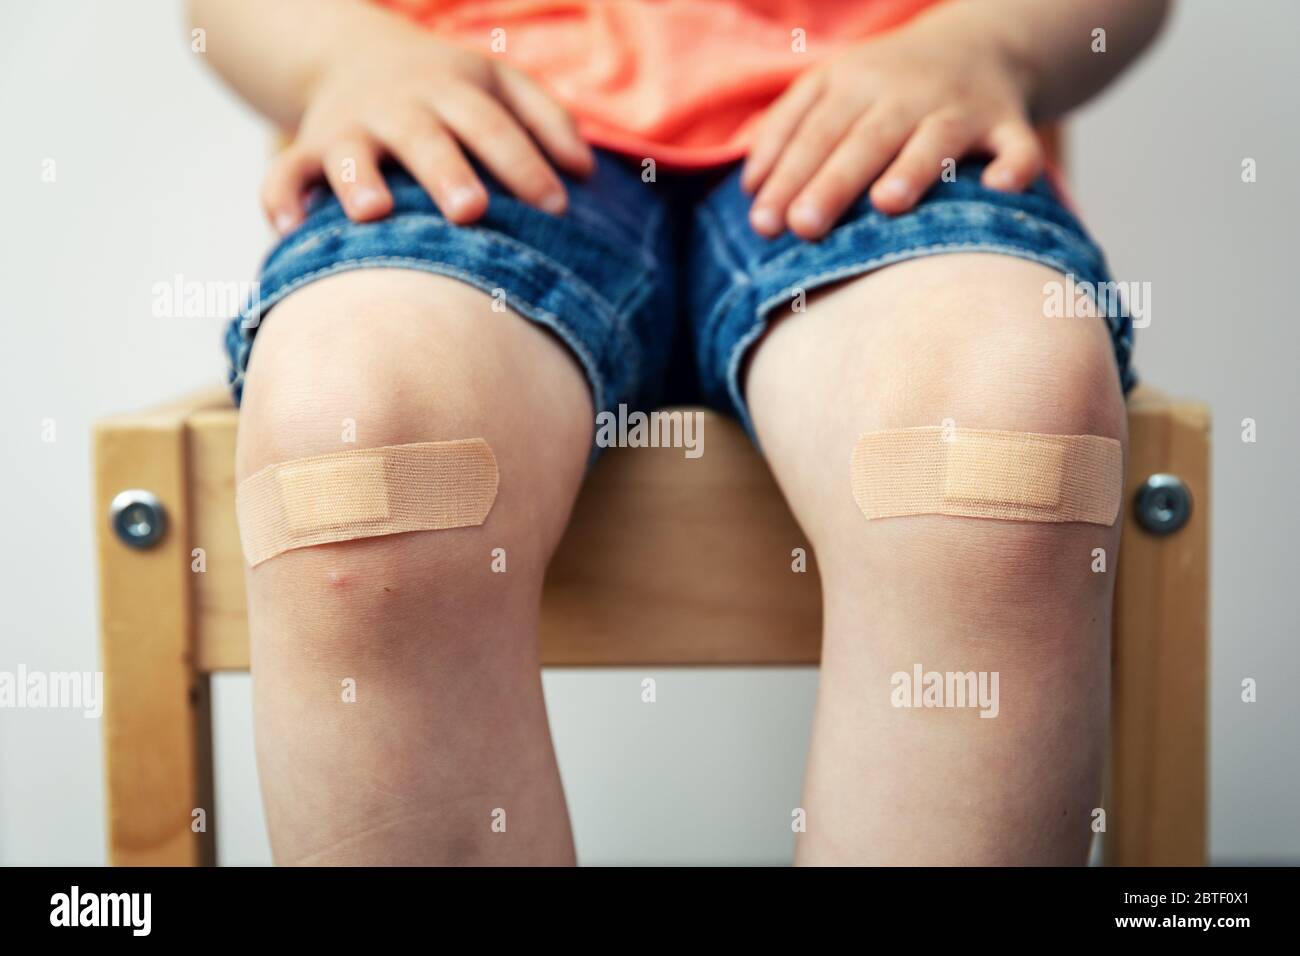 child knees with adhesive bandage strips Stock Photo